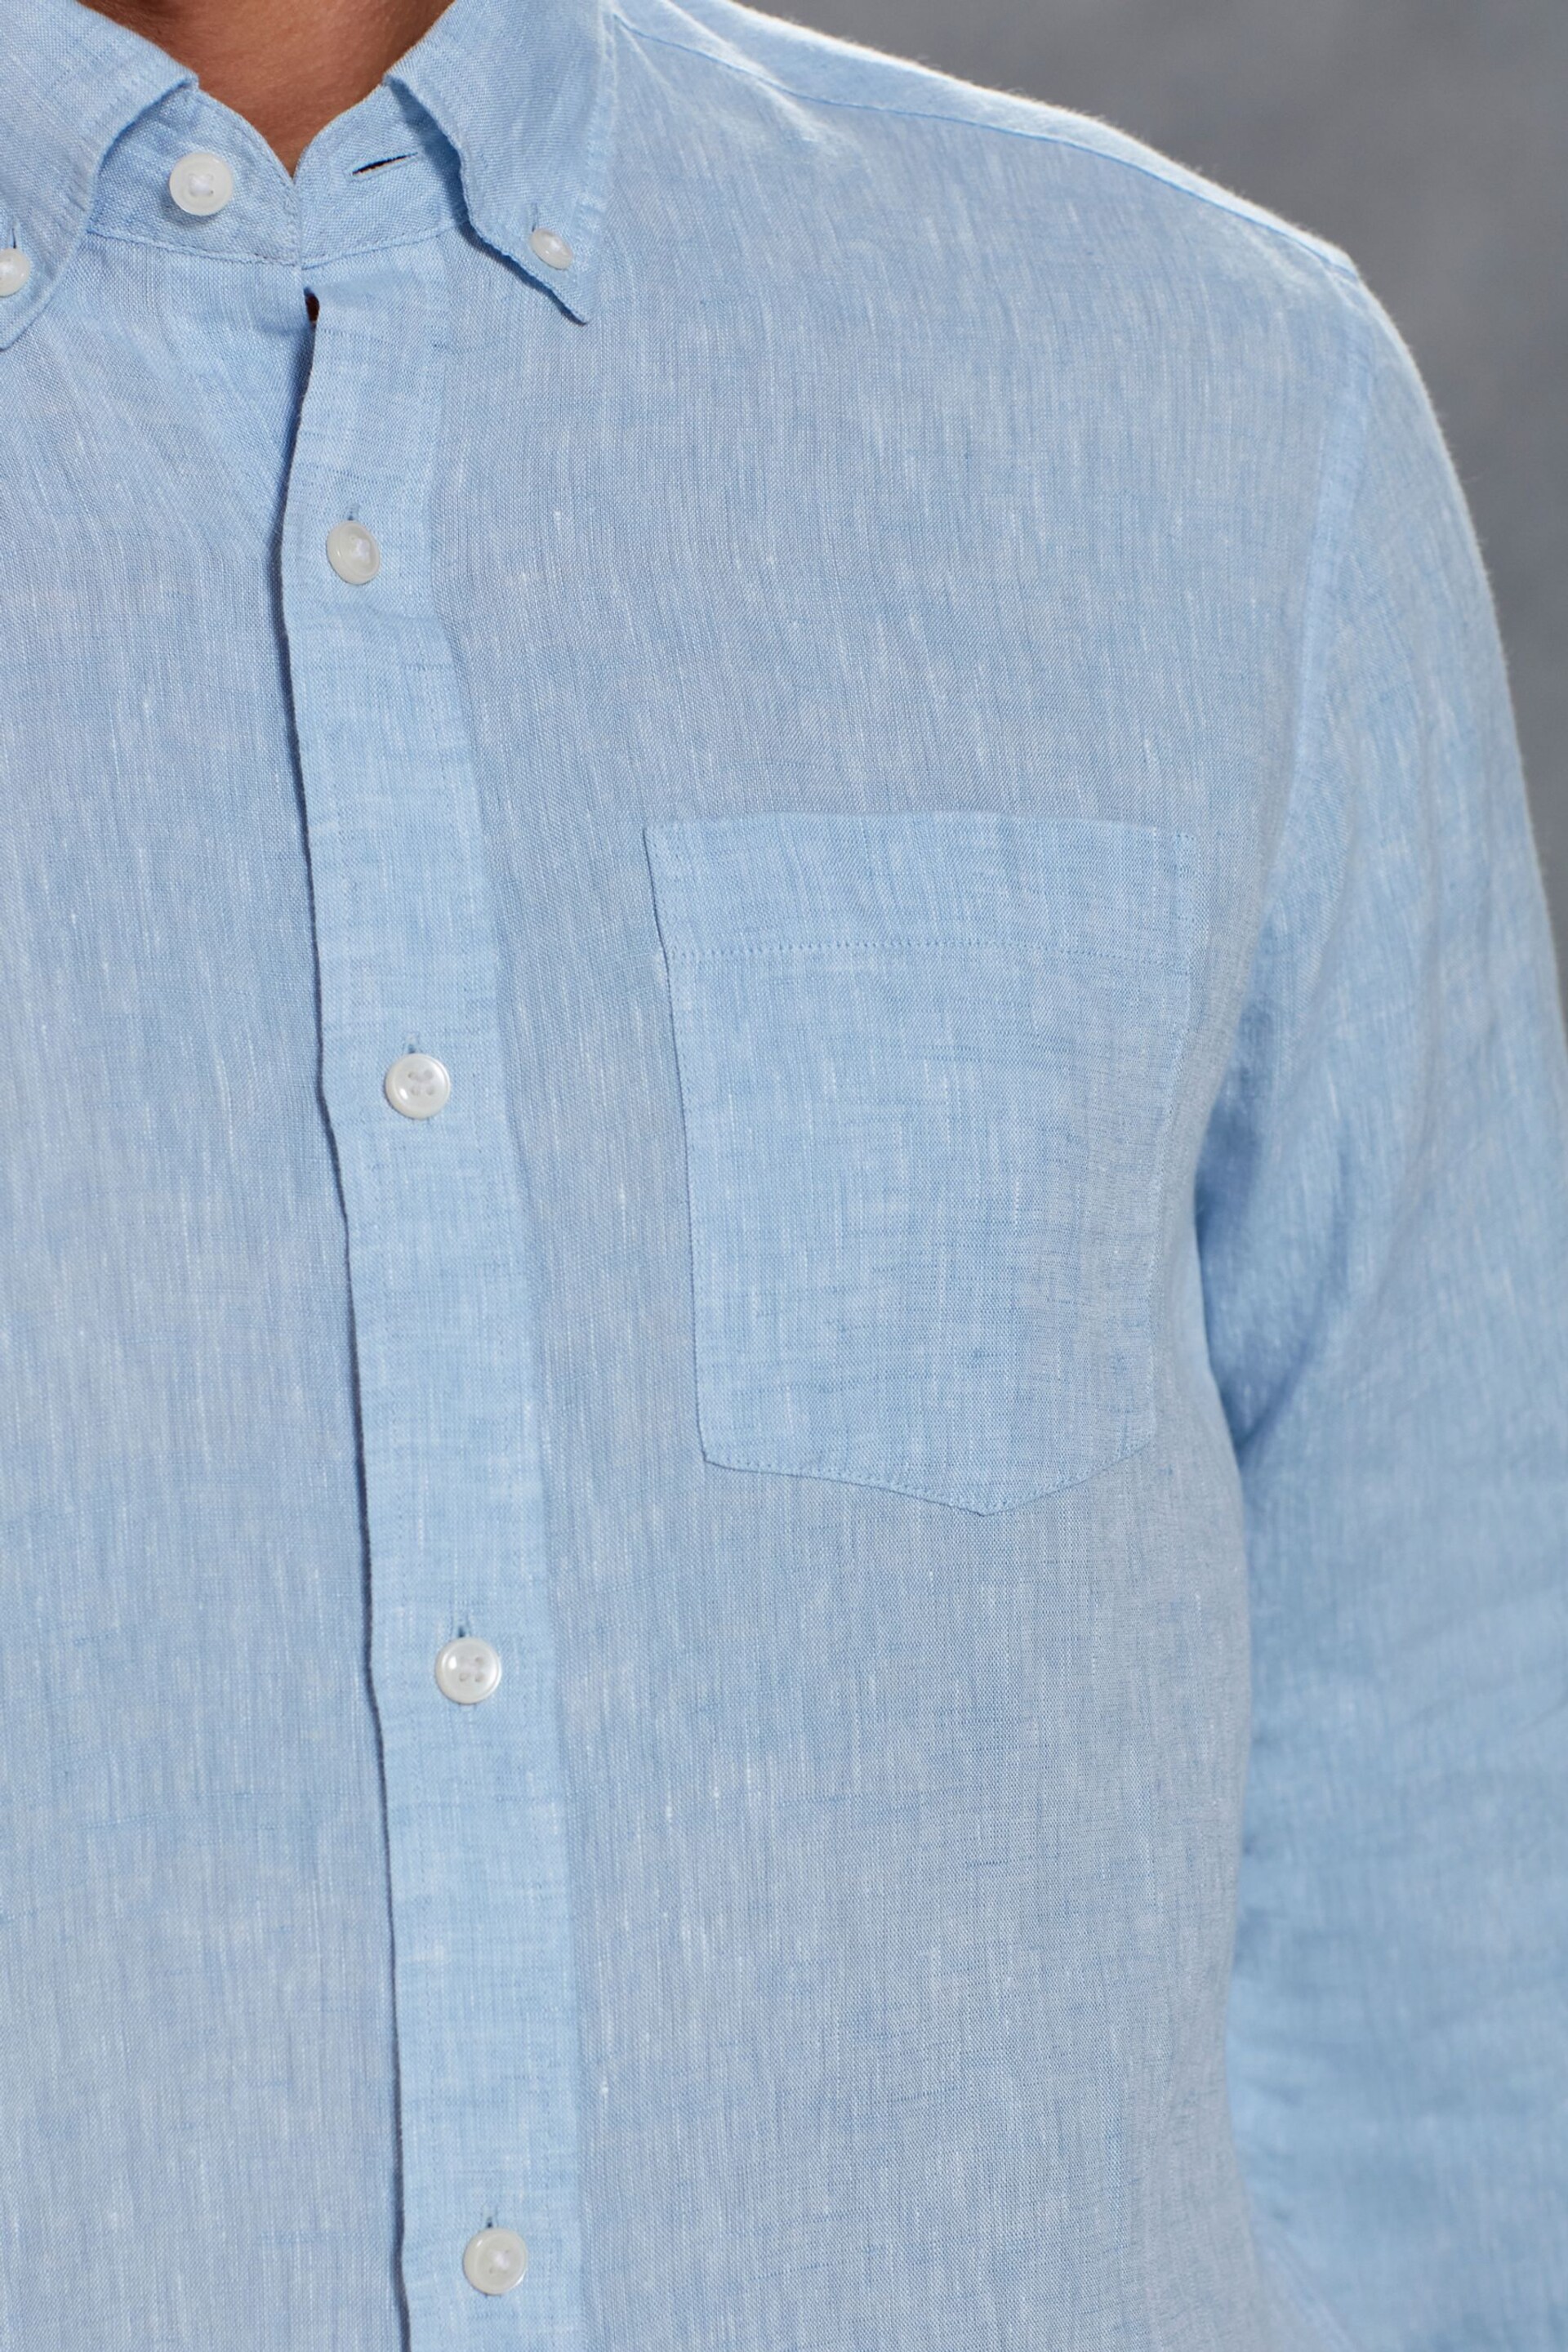 Blue Slim Fit Signature Baird McNutt Irish 100% Linen Trimmed Shirt - Image 7 of 11